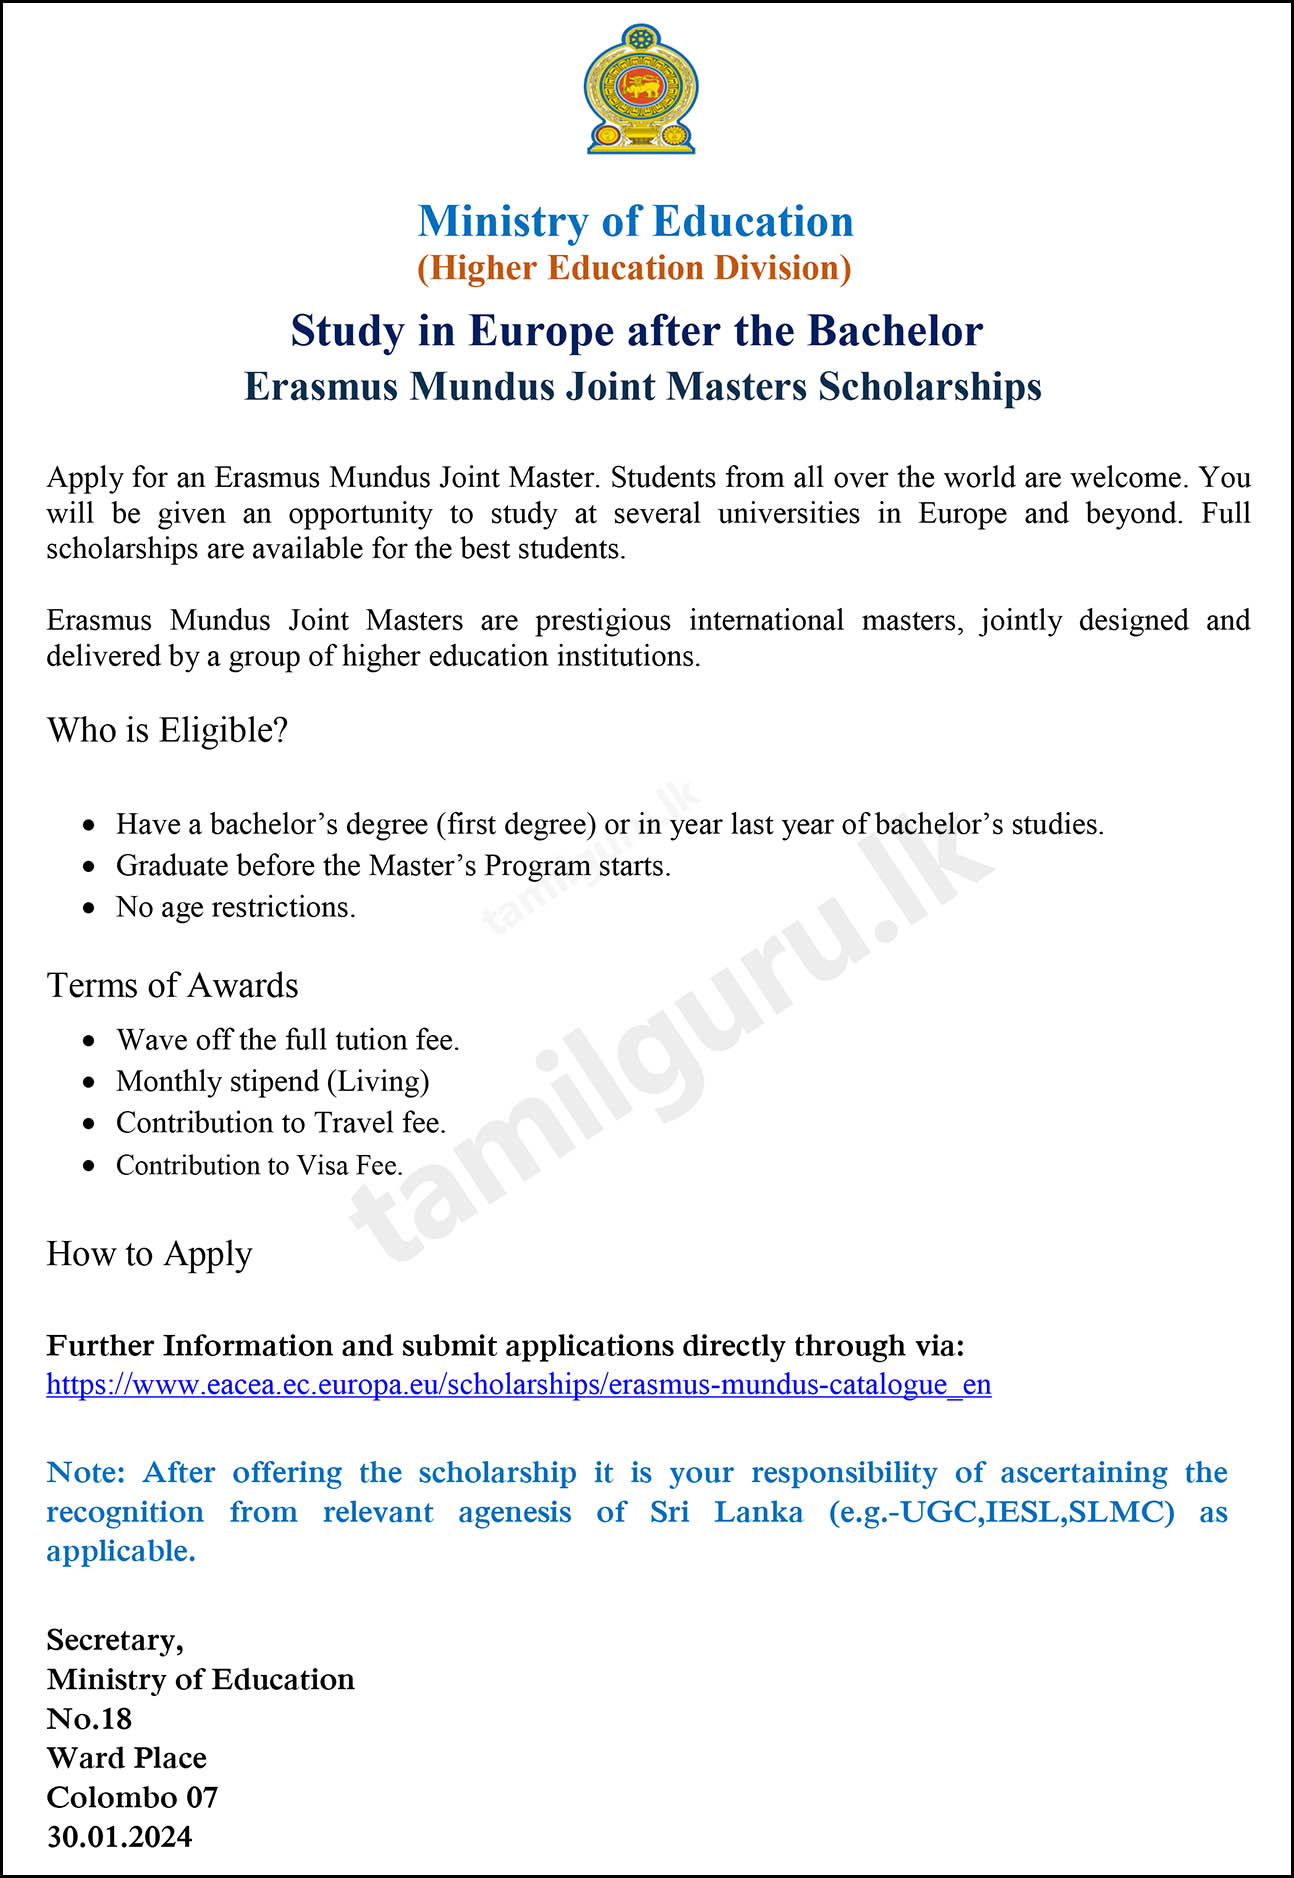 Erasmus Mundus Joint Masters Scholarships - 2024 (Study in Europe)